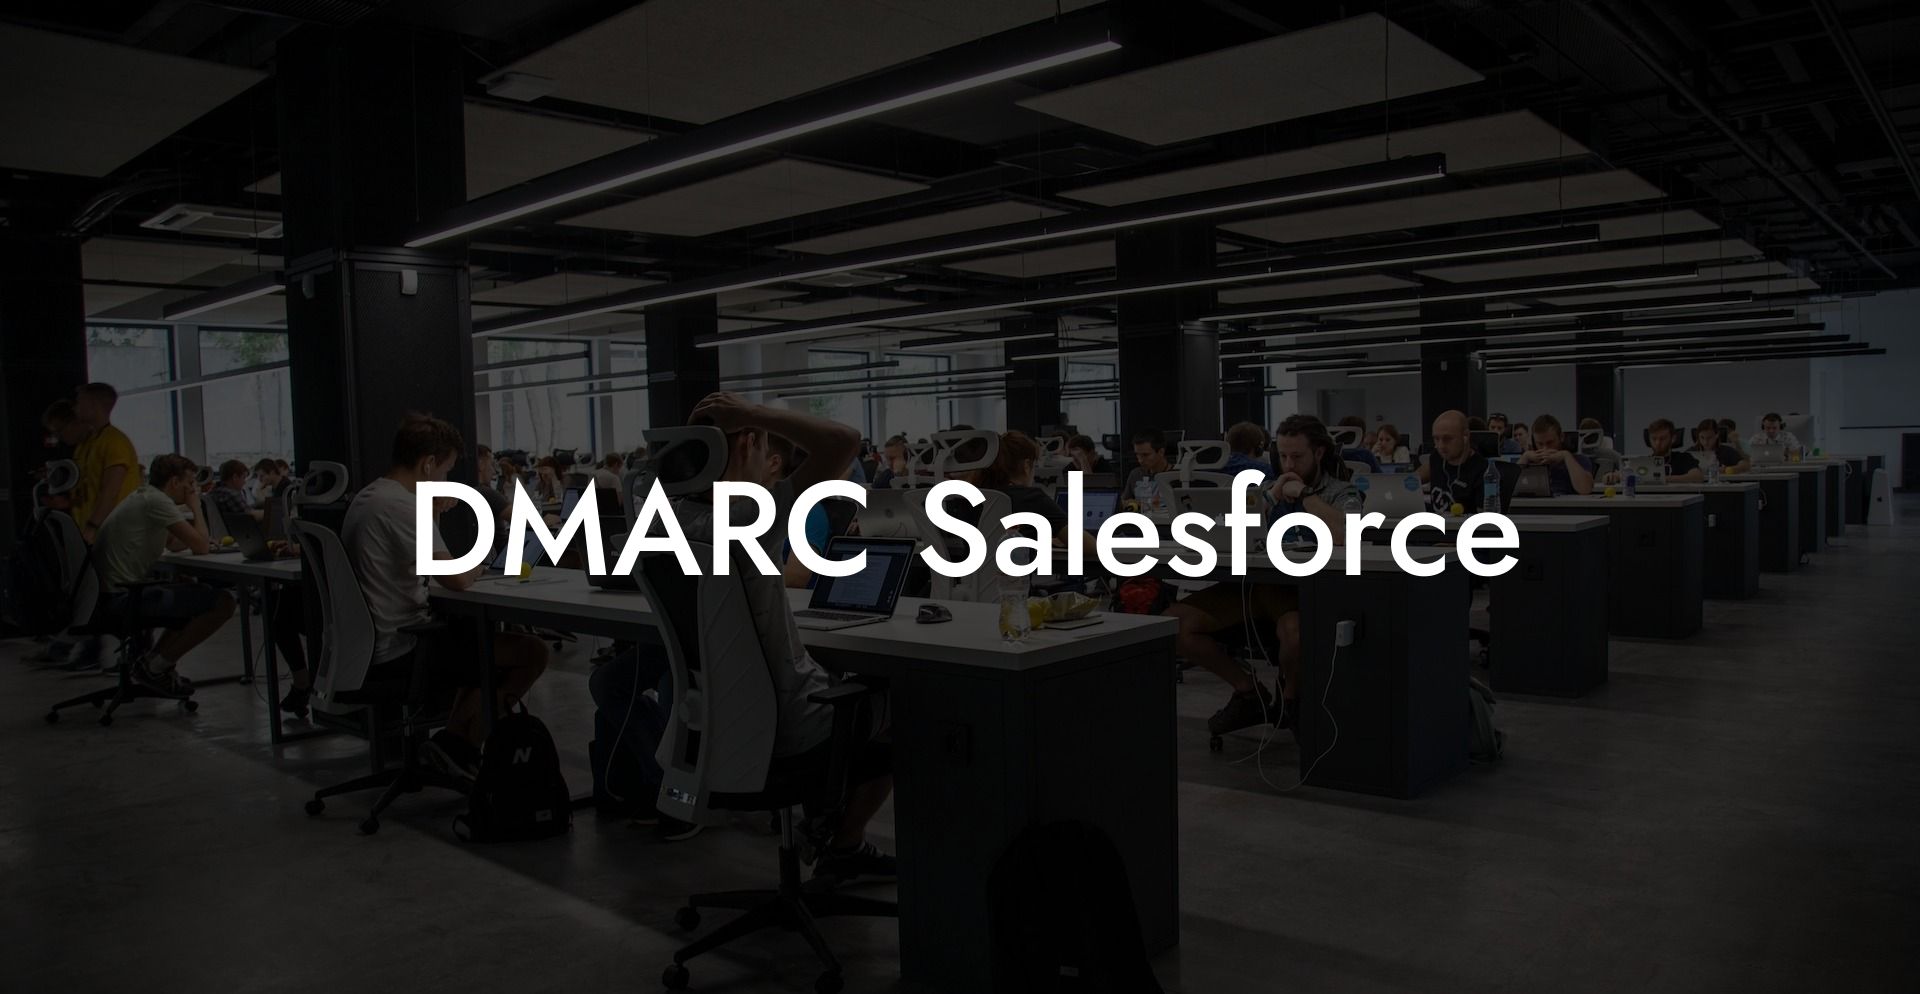 DMARC Salesforce